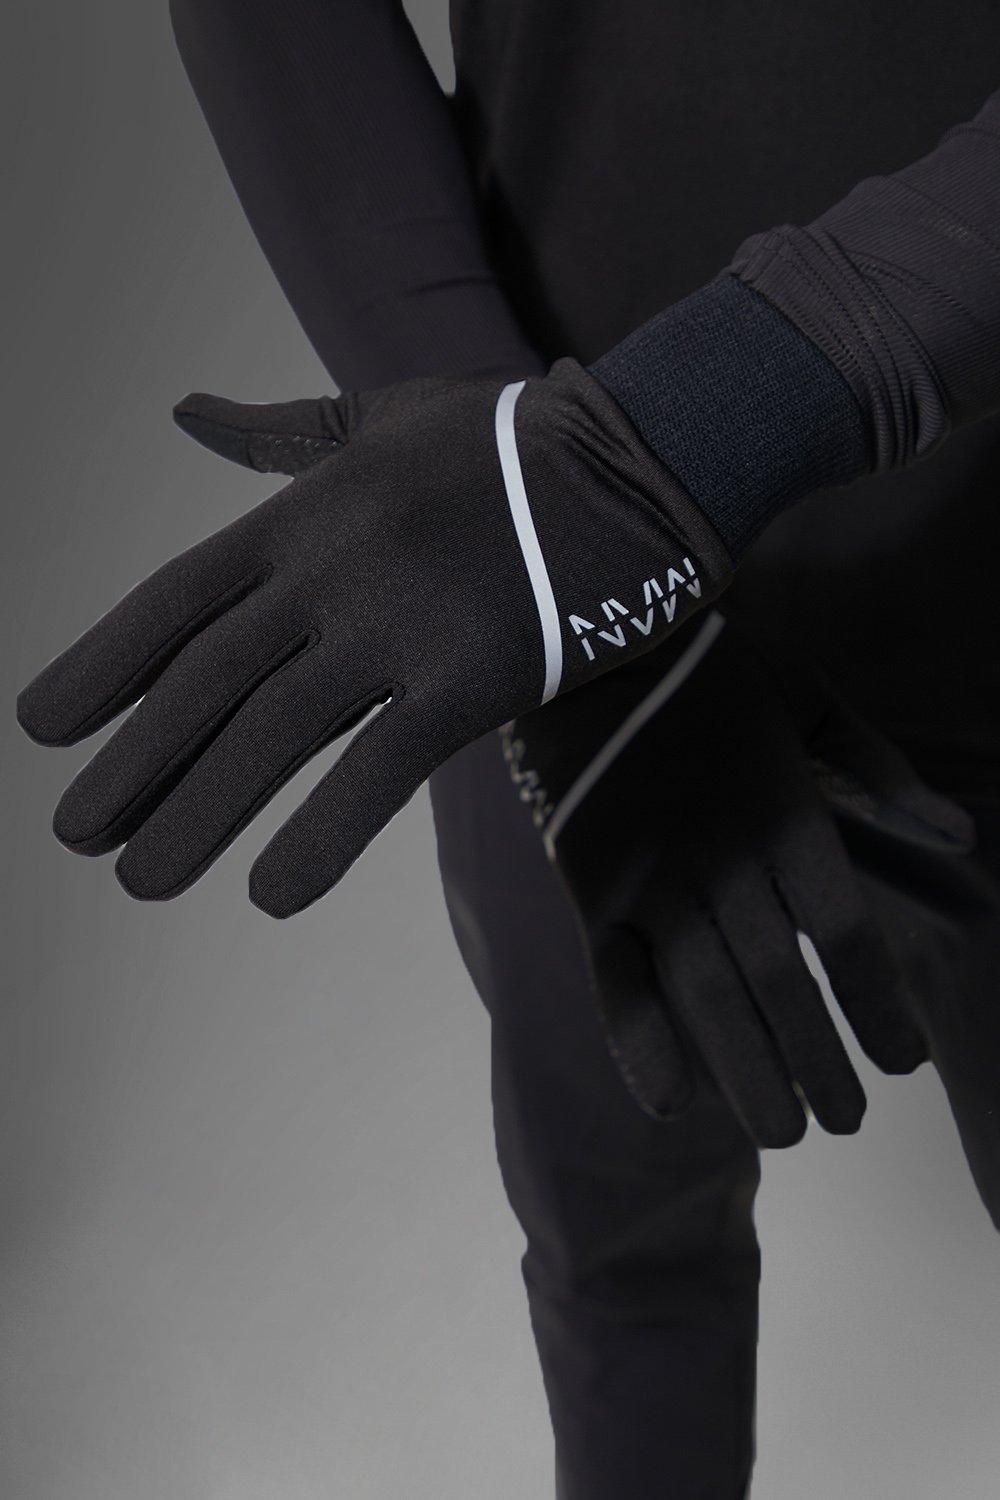 Boohoo Man Active Performance Gloves- Black  - Size: L/XL